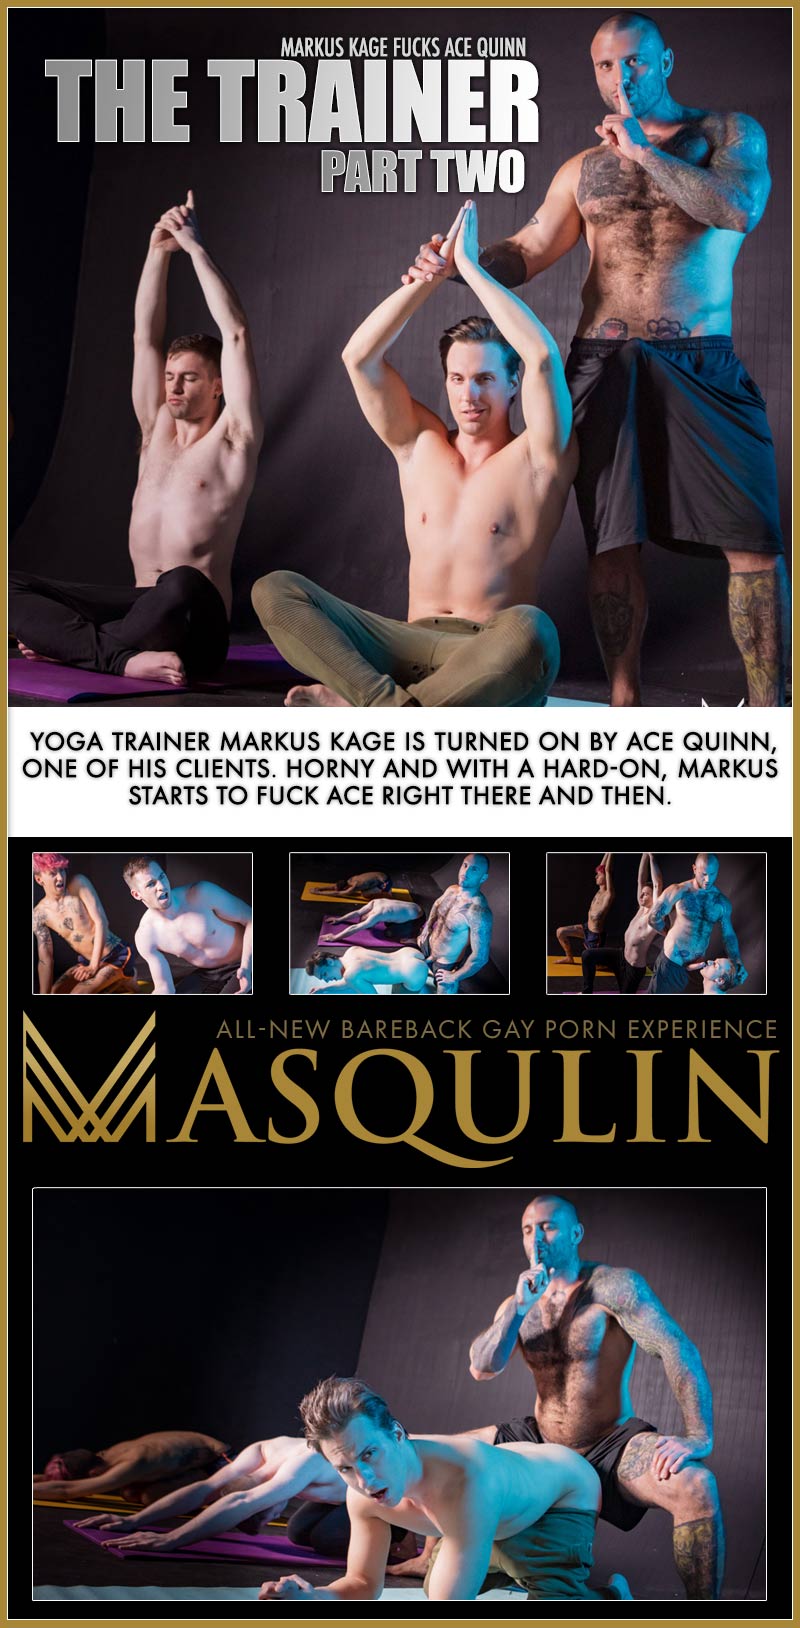 The Trainer (Markus Kage Fucks Ace Quinn)